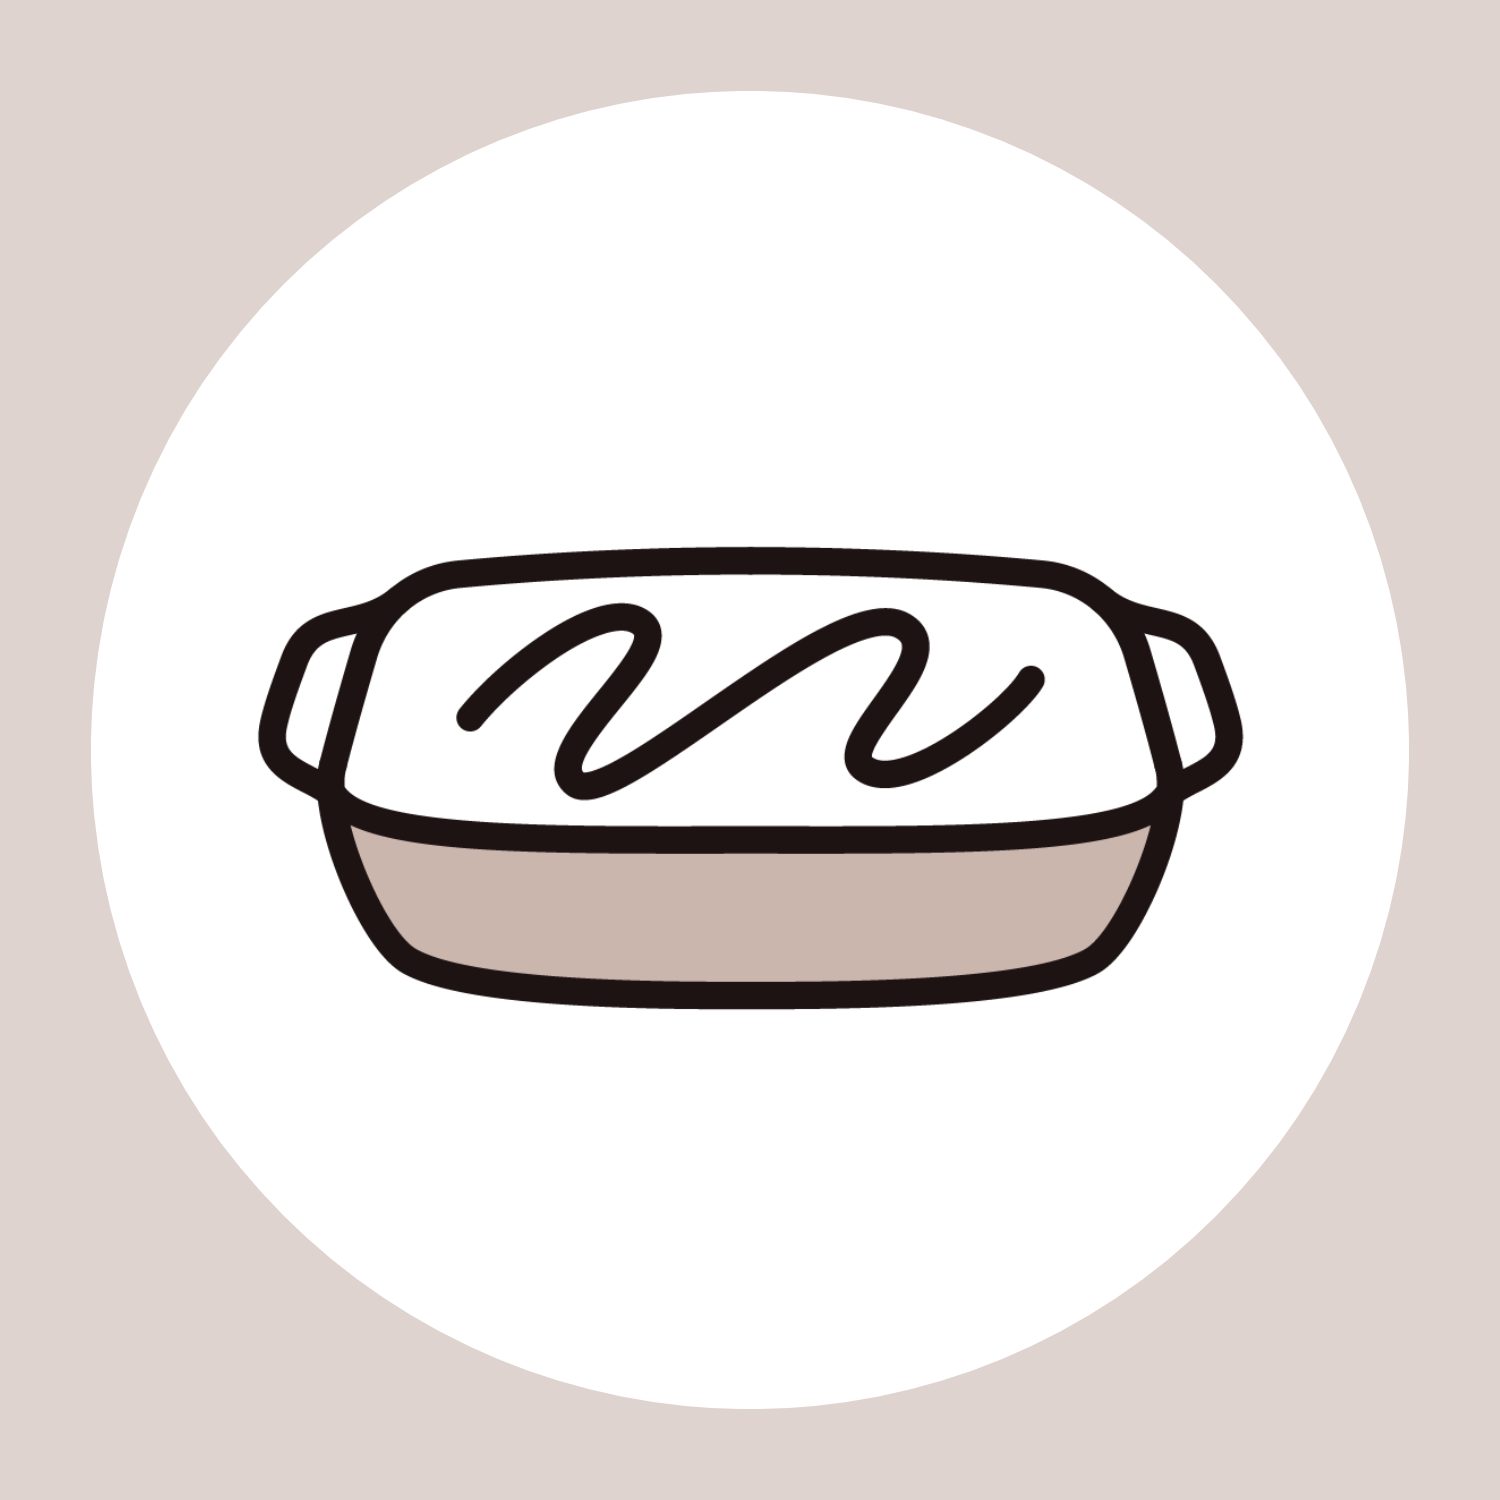 drawing of a casserole dish